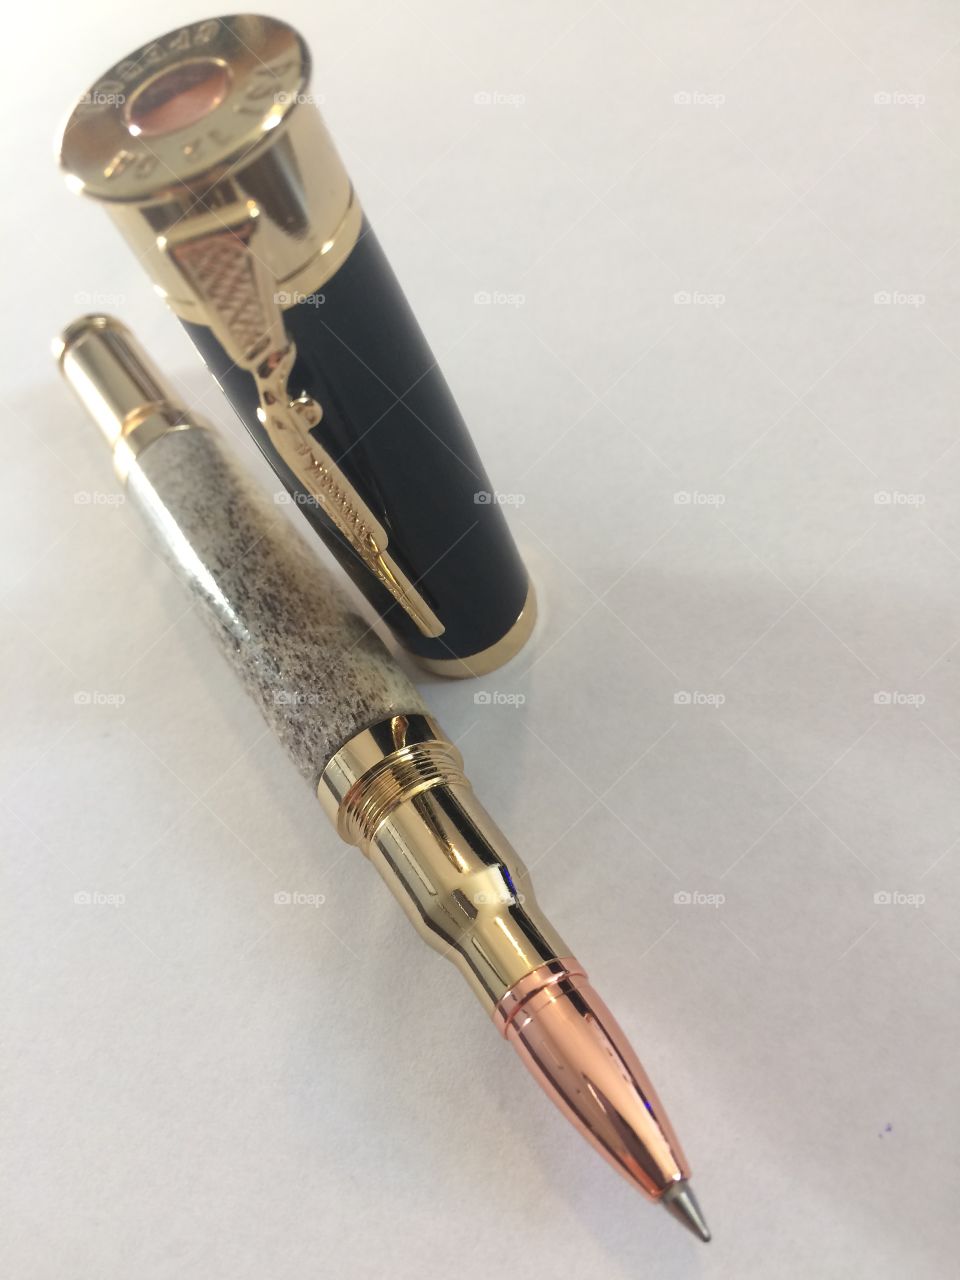 Home made bullet and deer antler pen